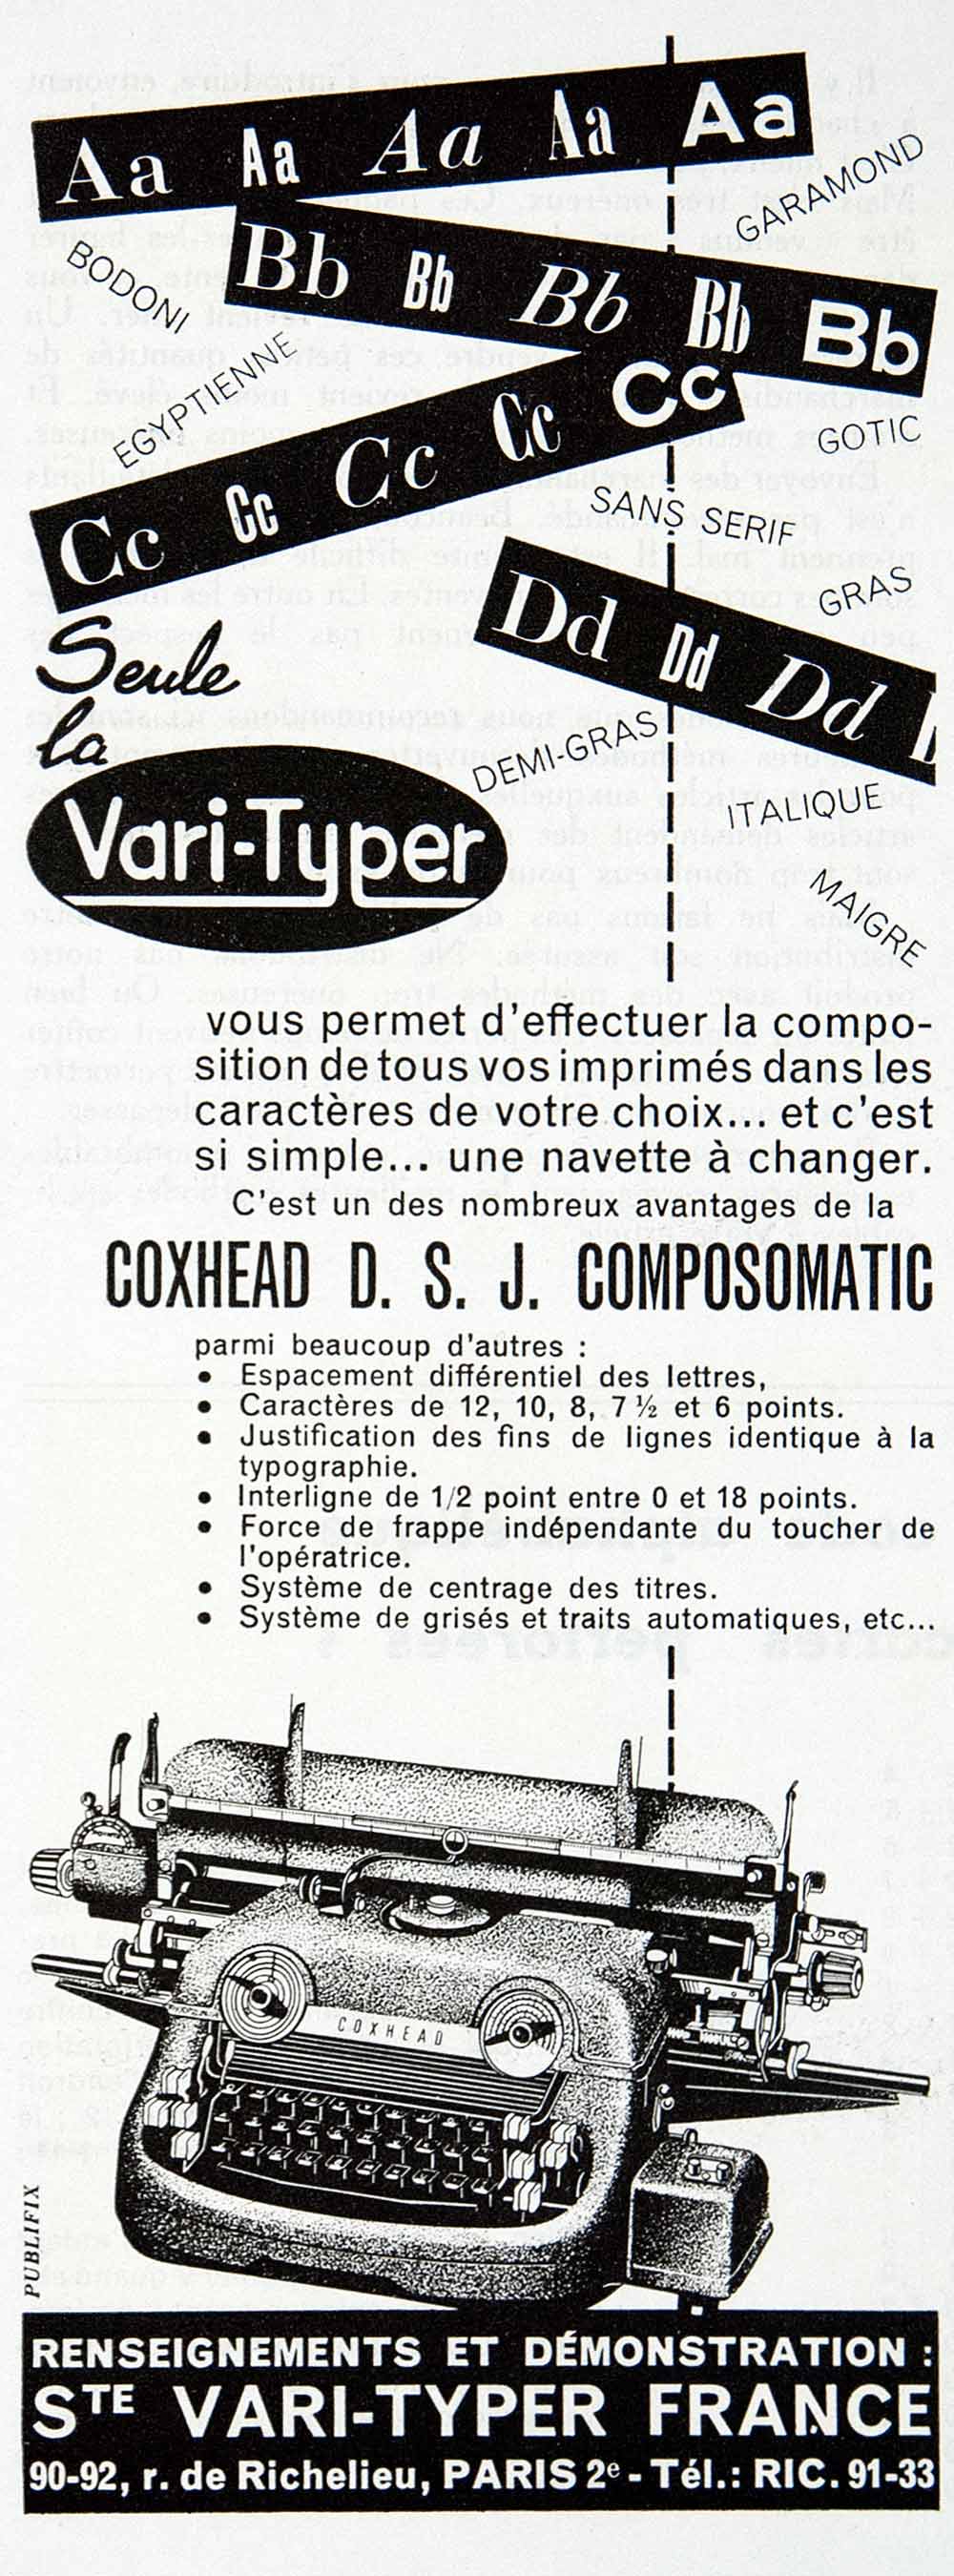 1955 Ad Typewriter Publishing Coxhead Vari-Typer Composomatic Writing VEN2